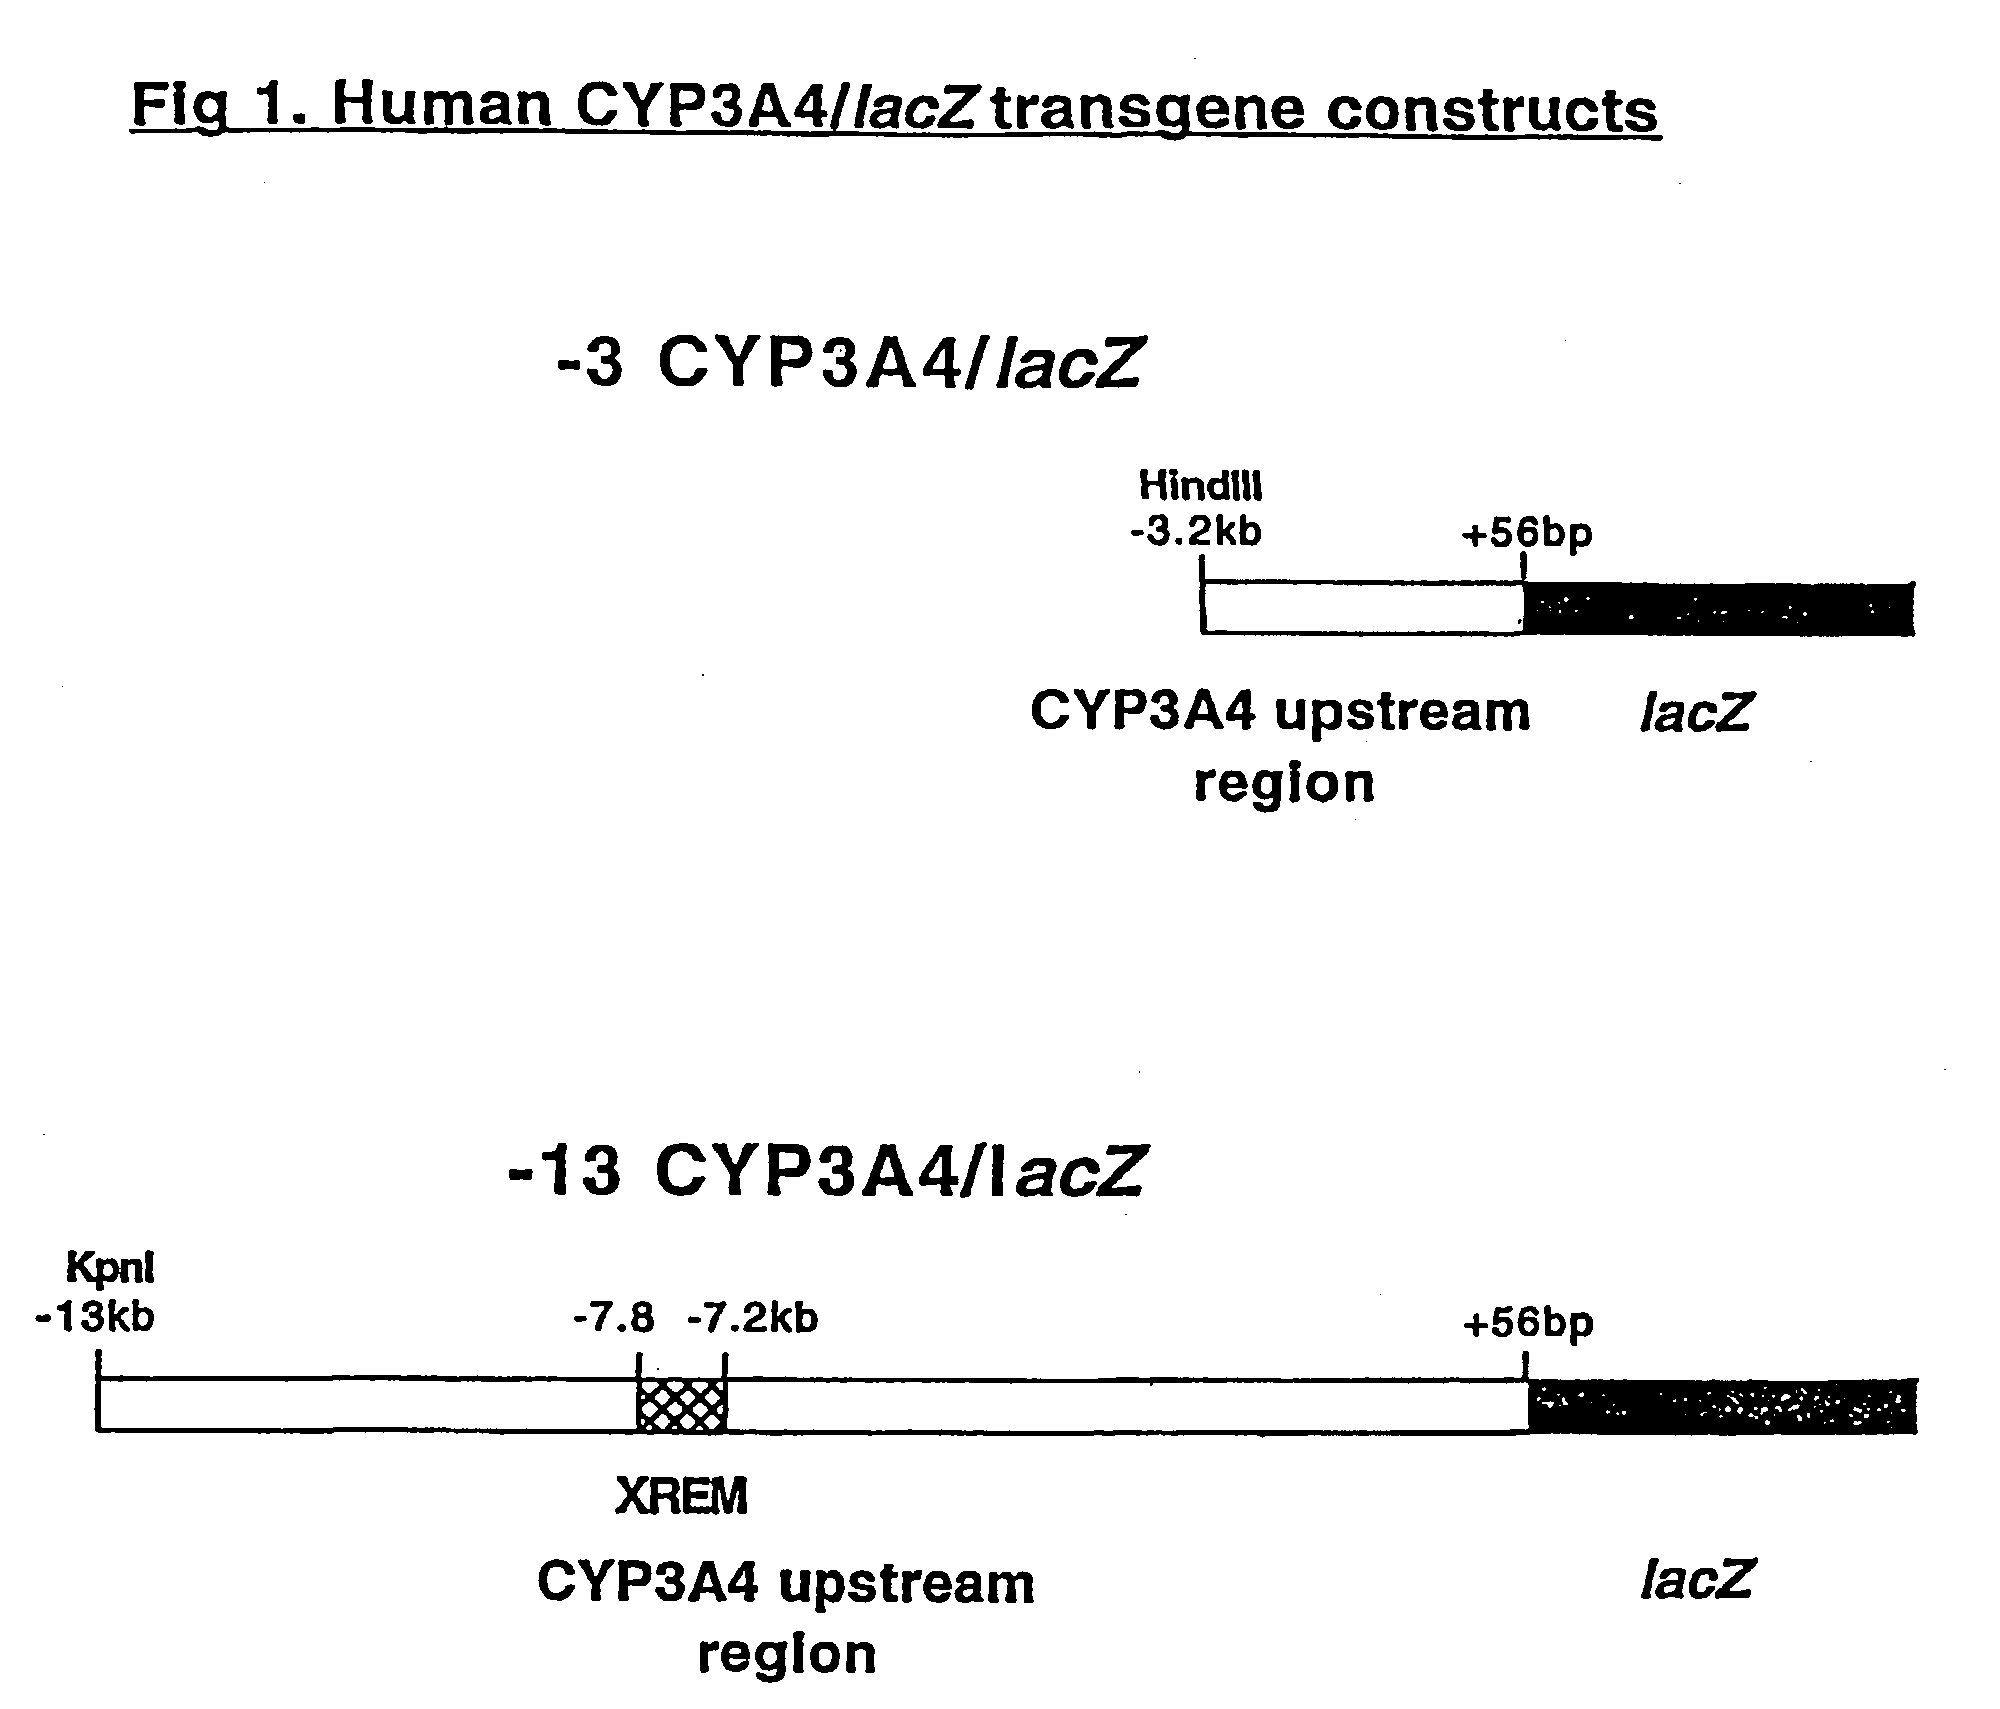 Transgenic animals for analyzing CYP3A4 cytochrome P450 gene regulation